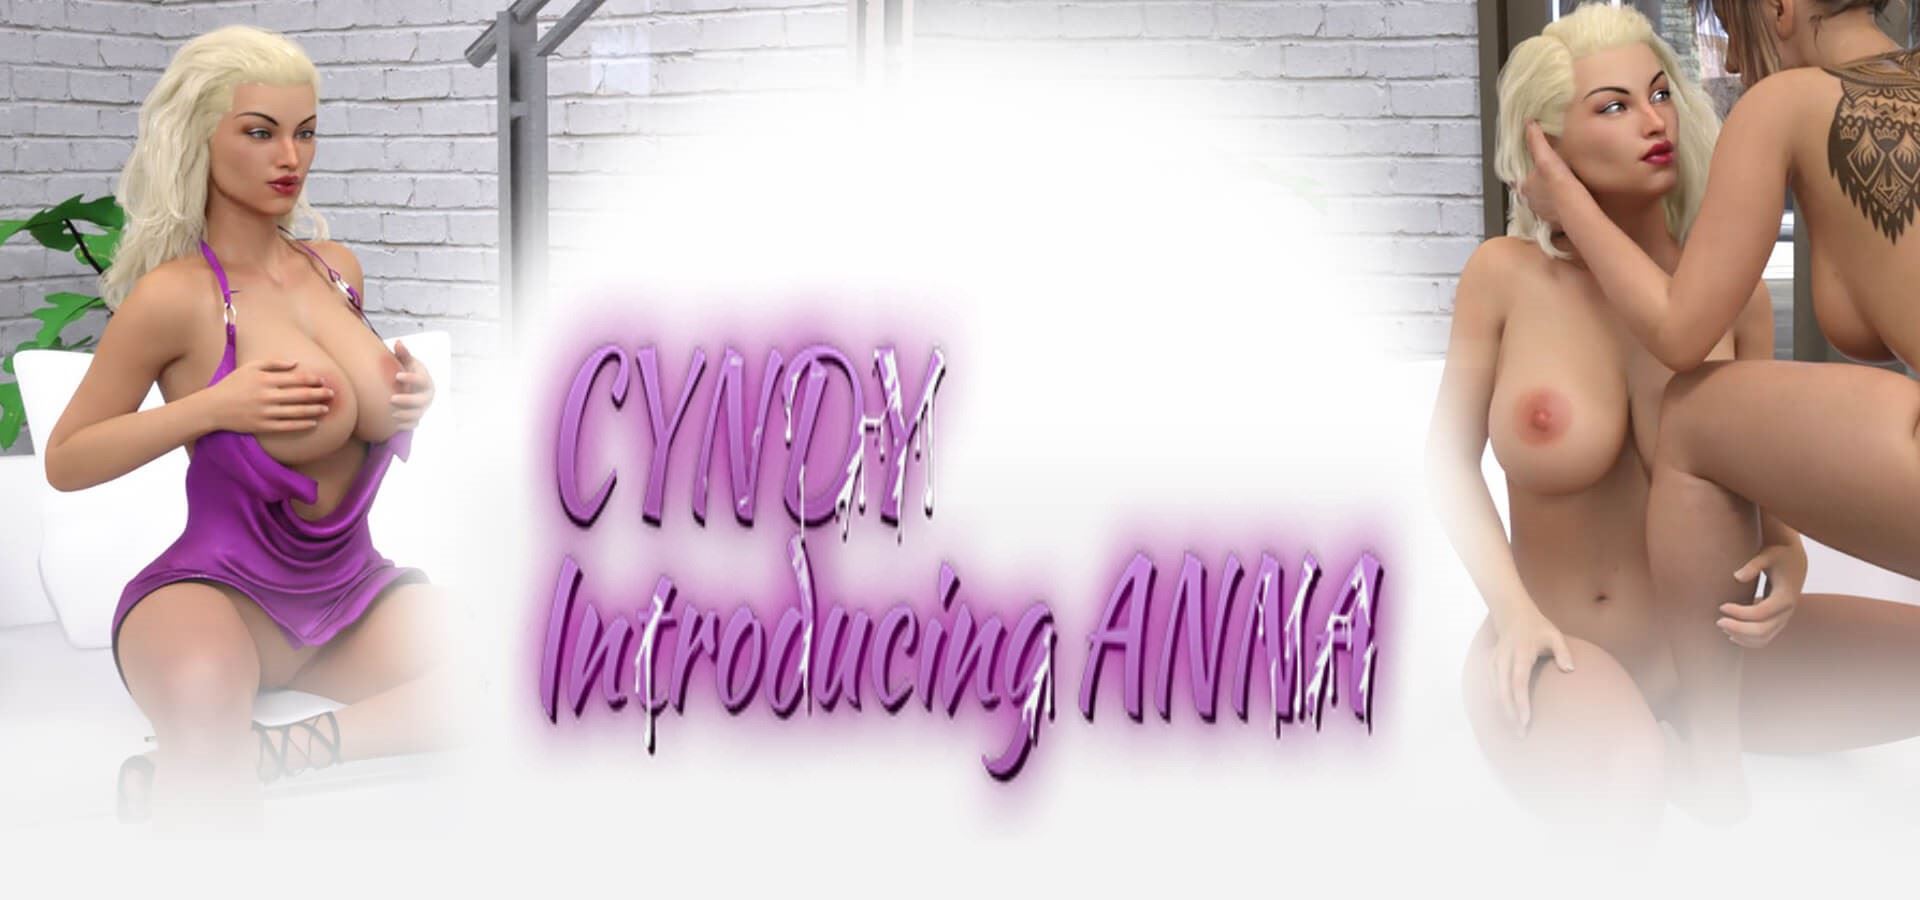 Cyndy Introducing Anna DLC porn xxx game download cover